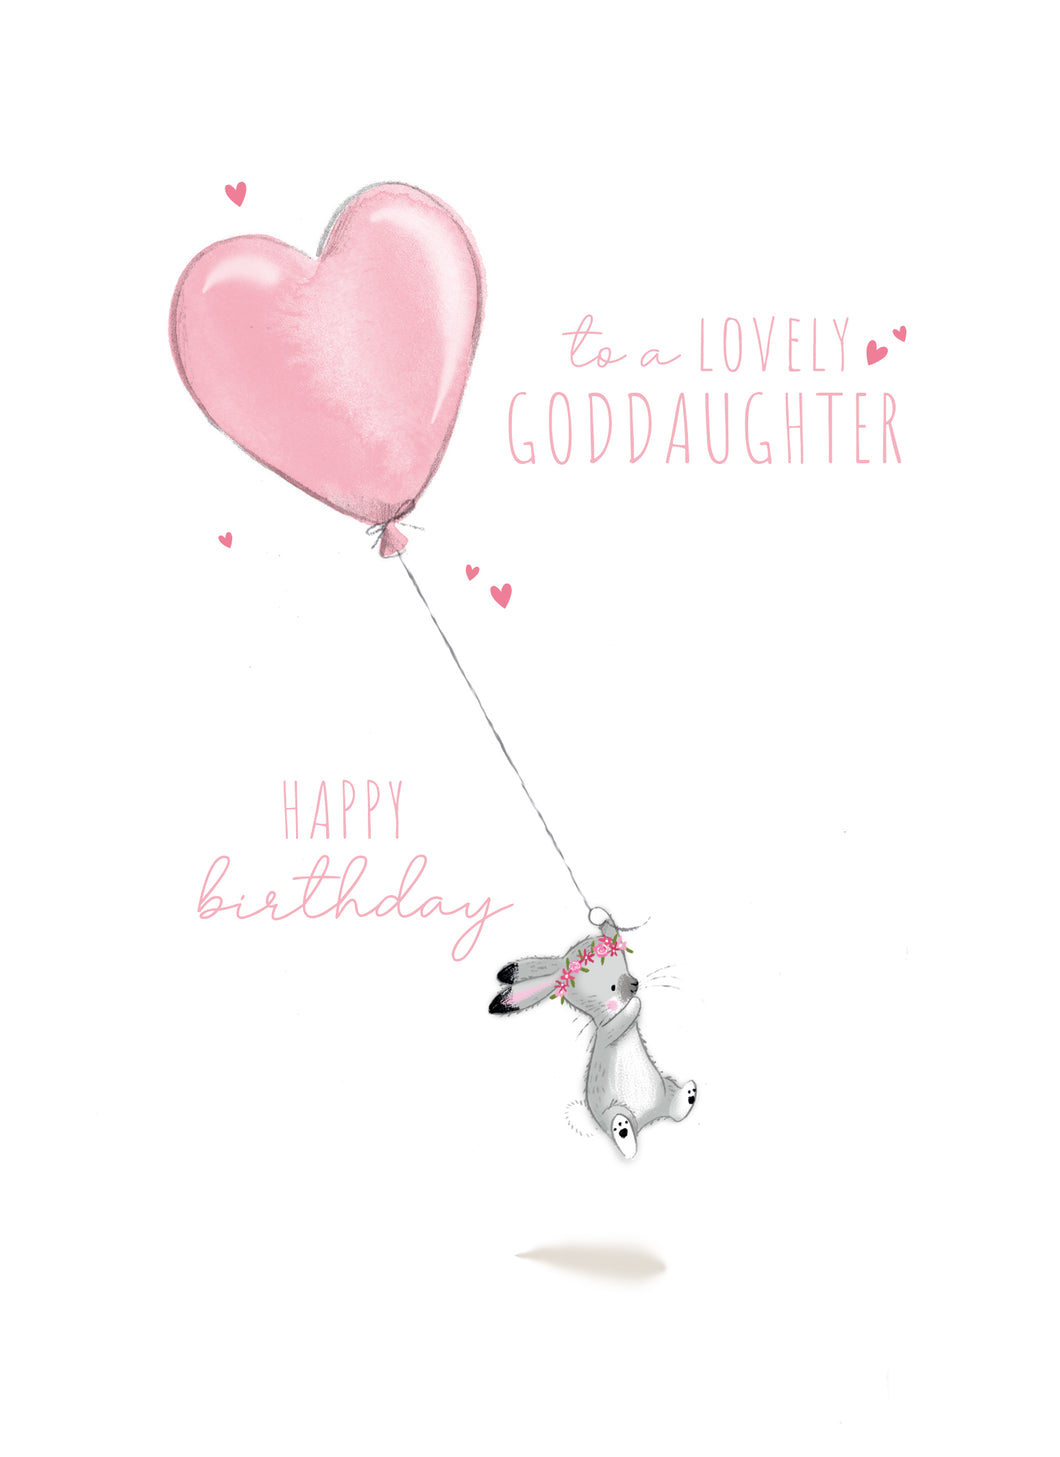 Goddaughter Birthday Card - Birthday Card